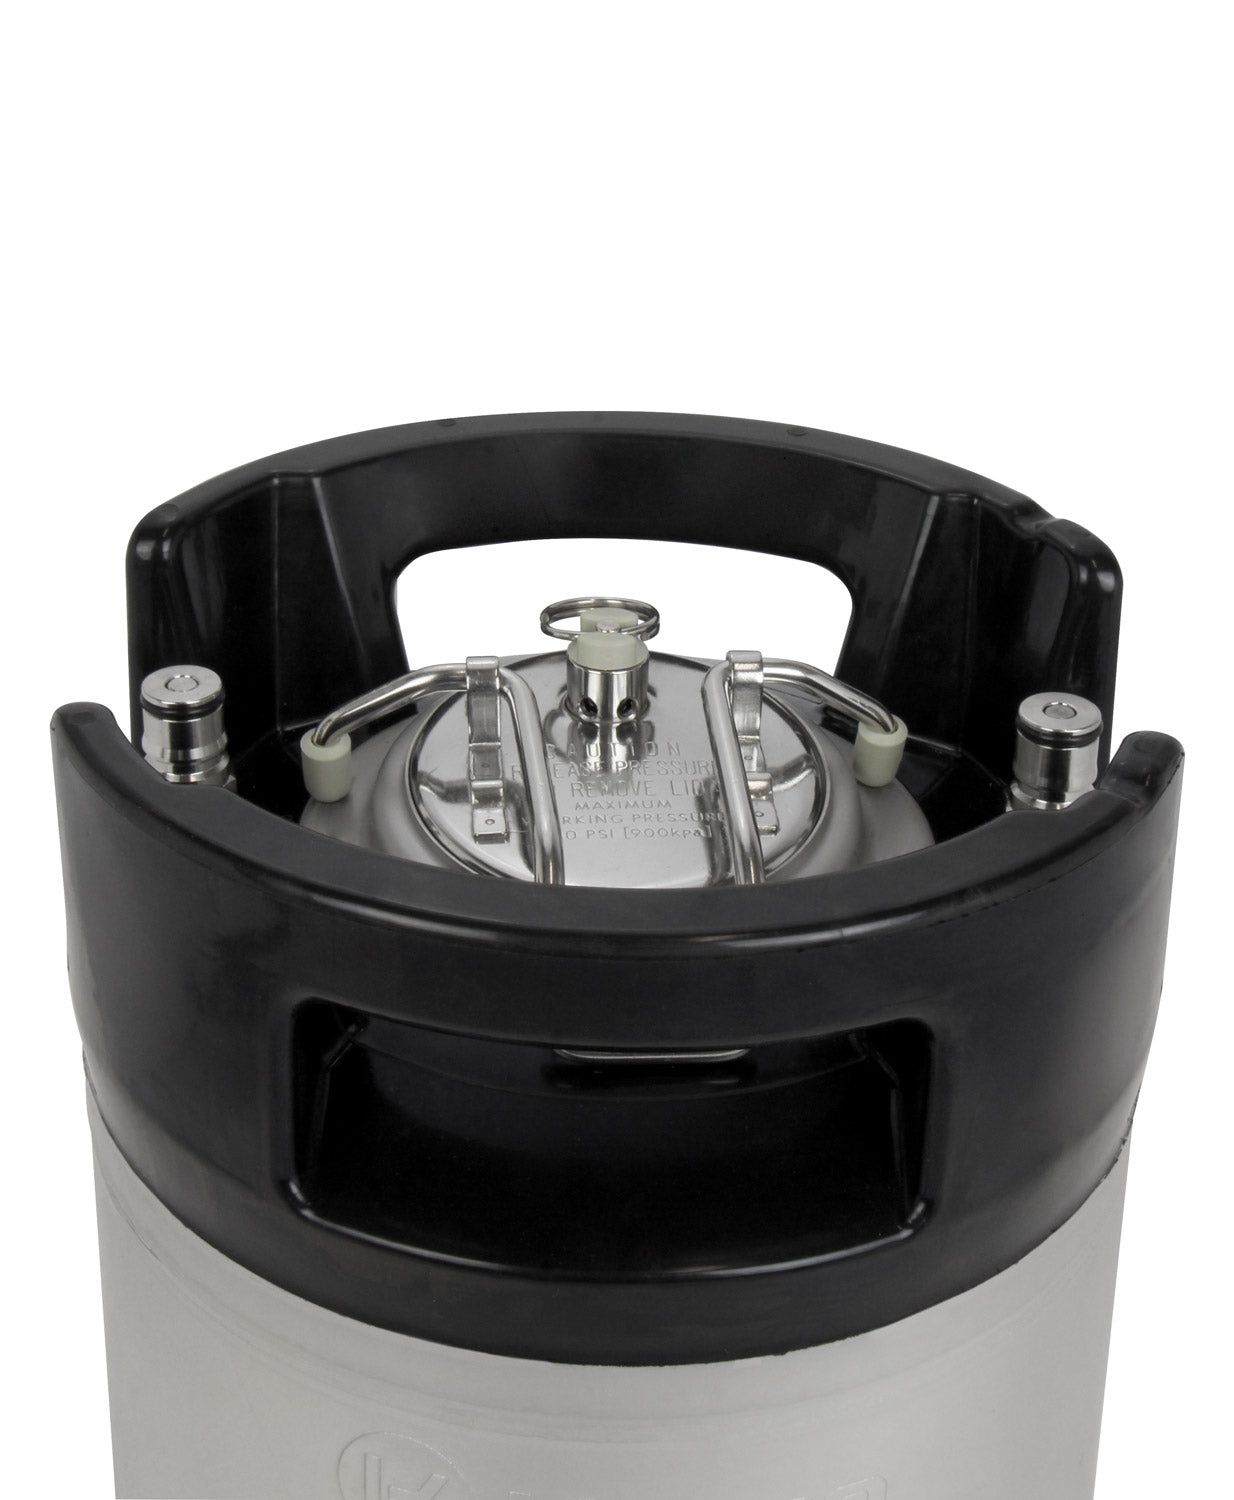 1.75 Gallon Ball Lock Keg - Rubber Handle - Set of 2